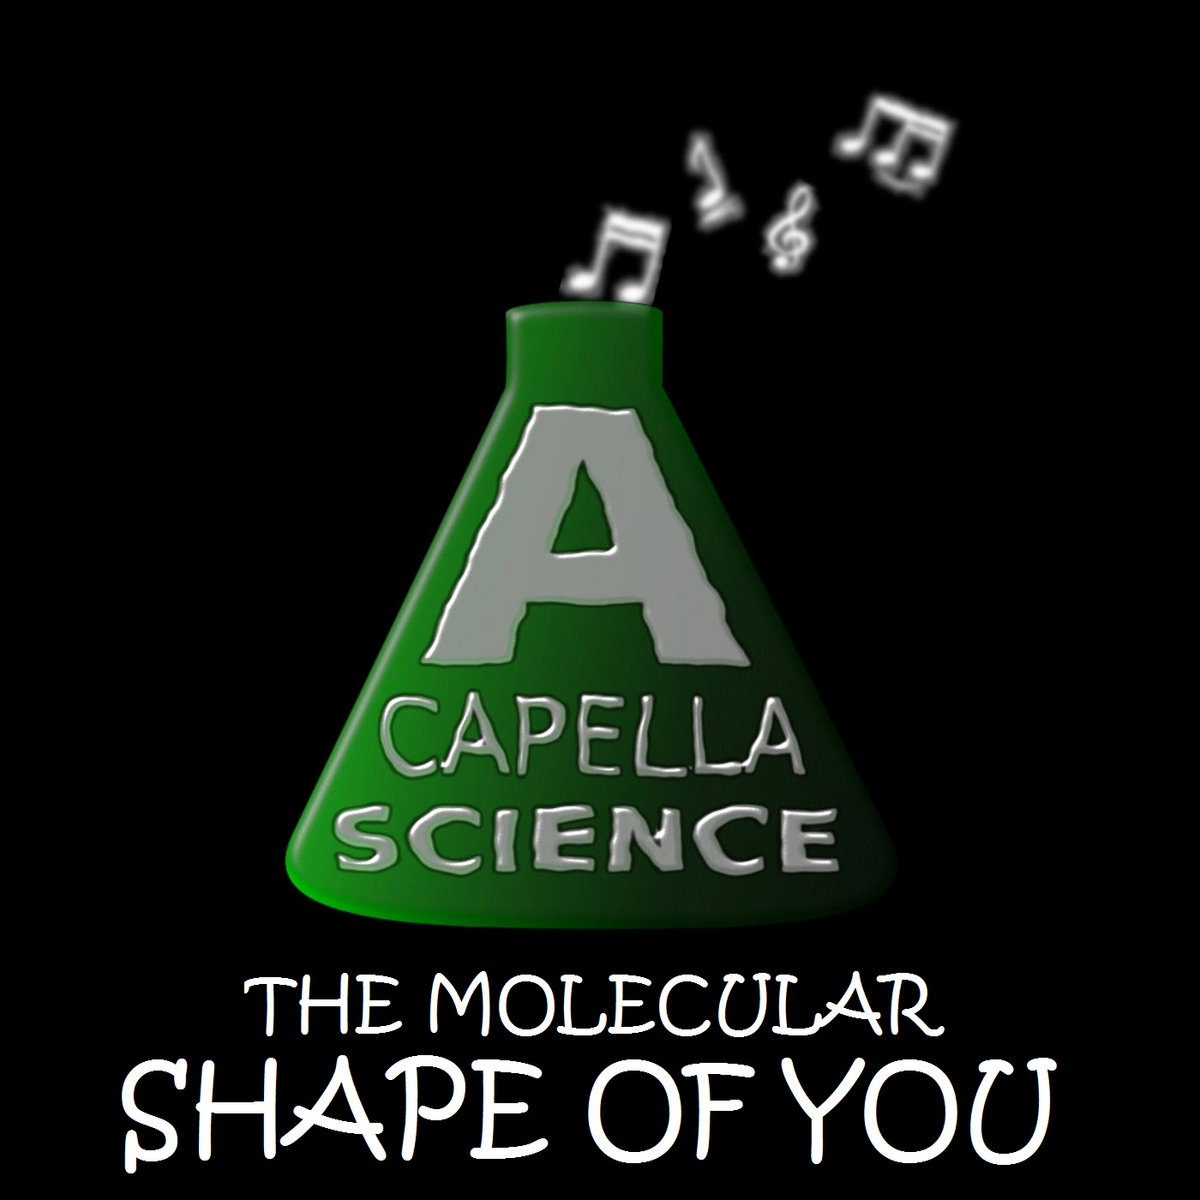 The Molecular Shape Of You A Capella Science Timblais